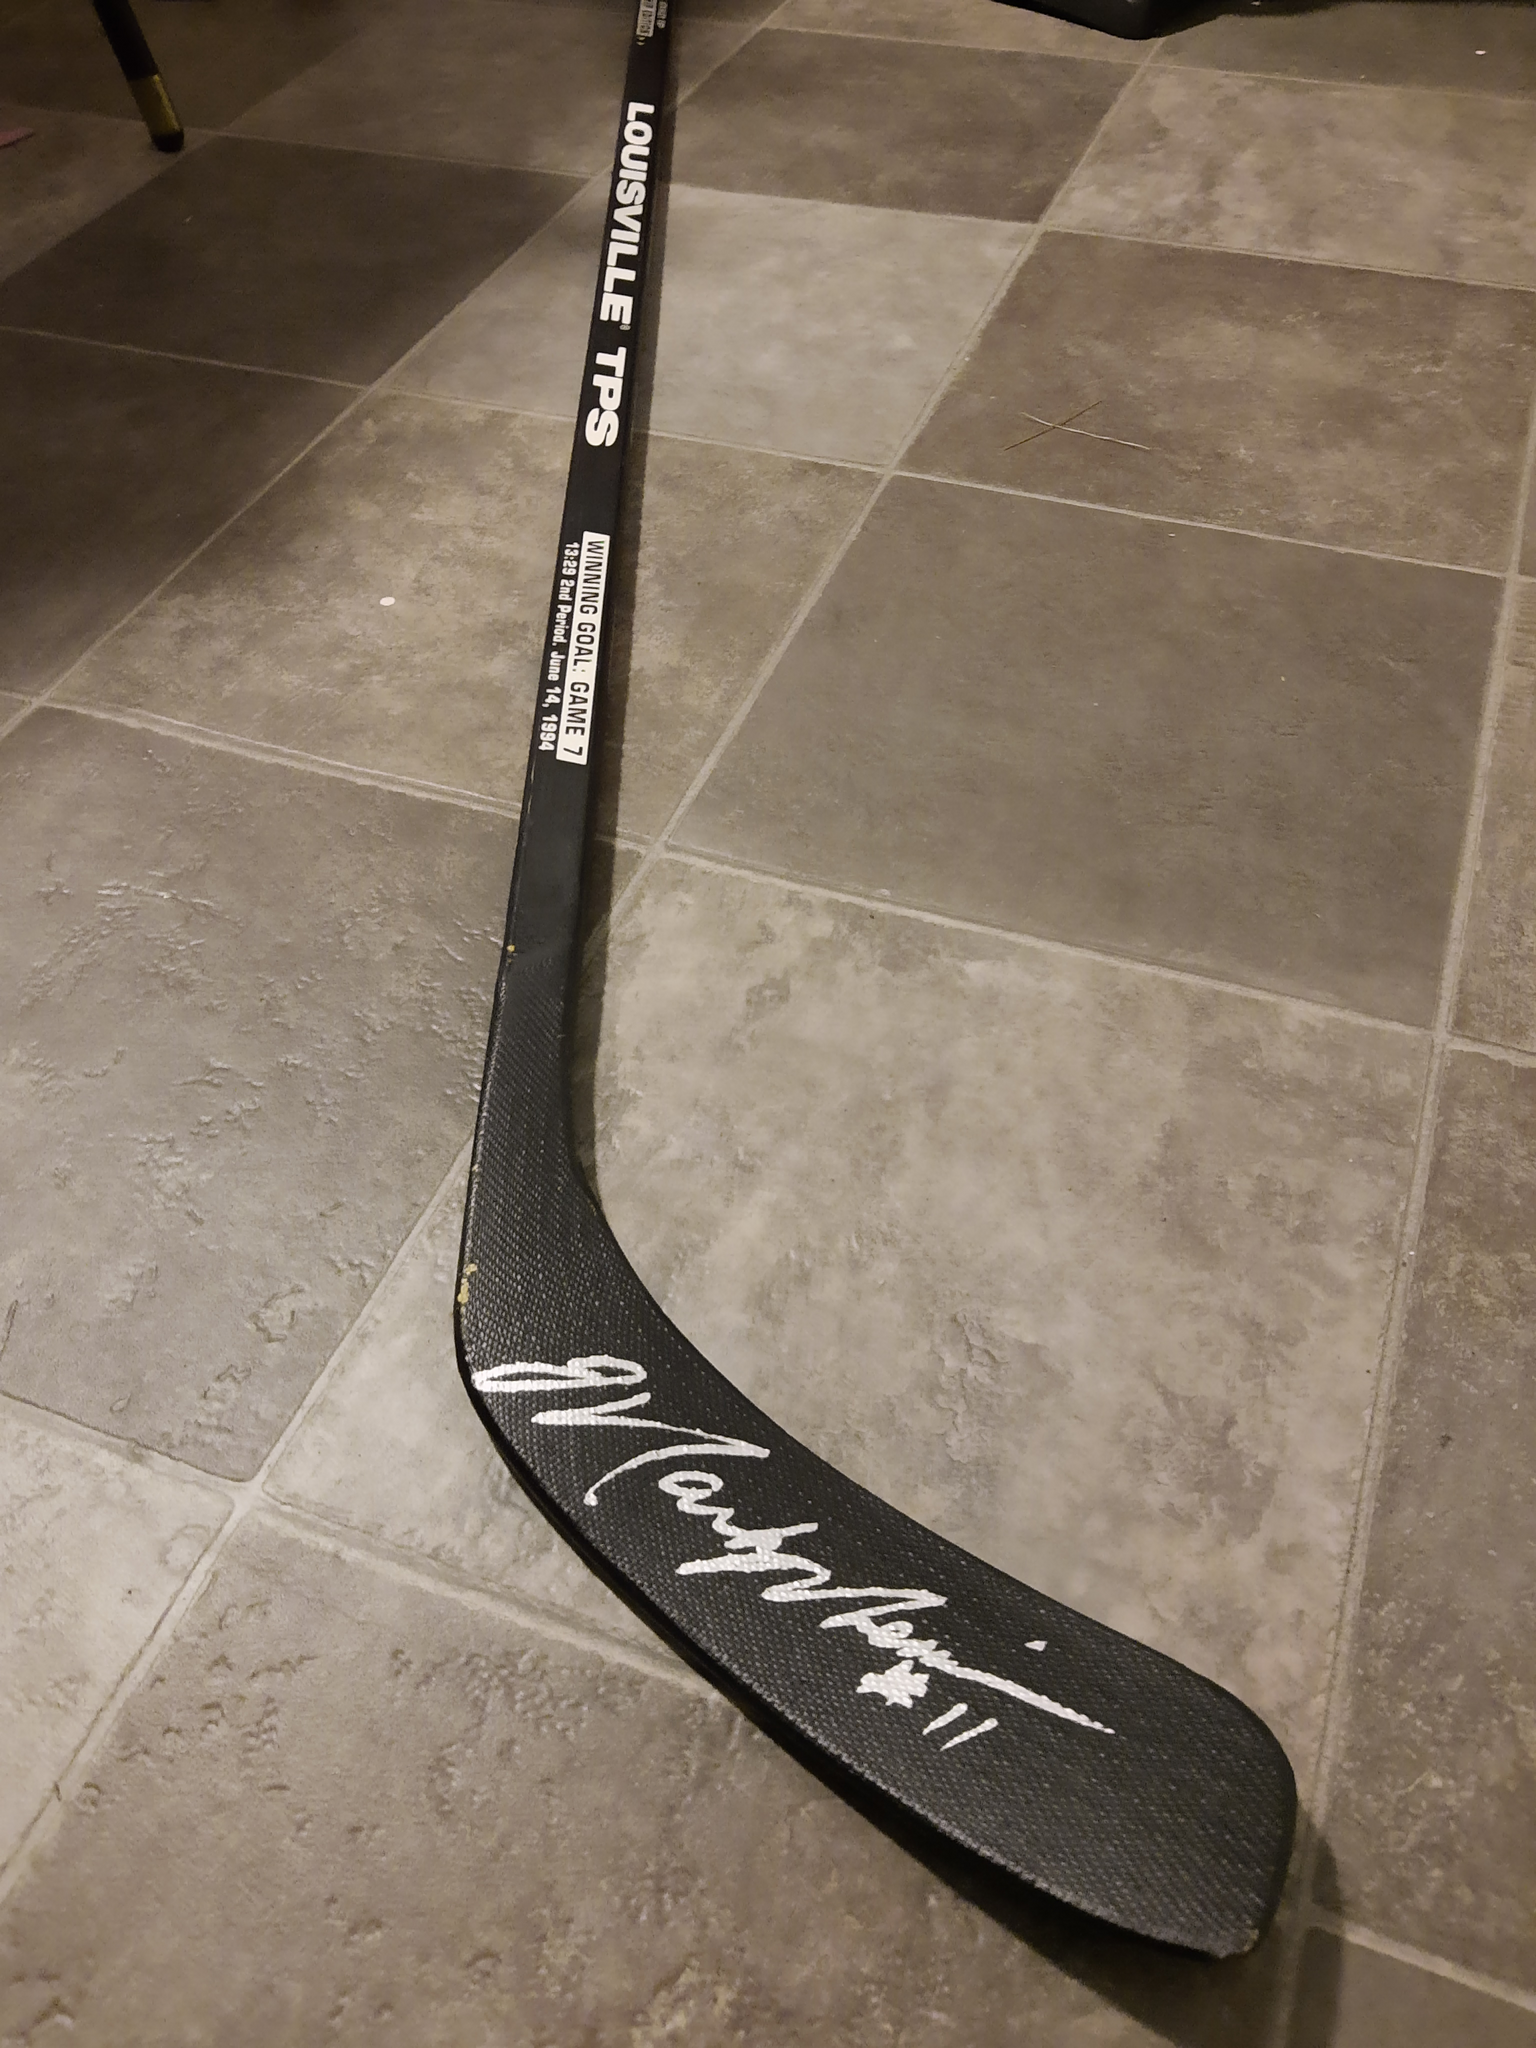 Mark Messier Autographed Hockey Stick